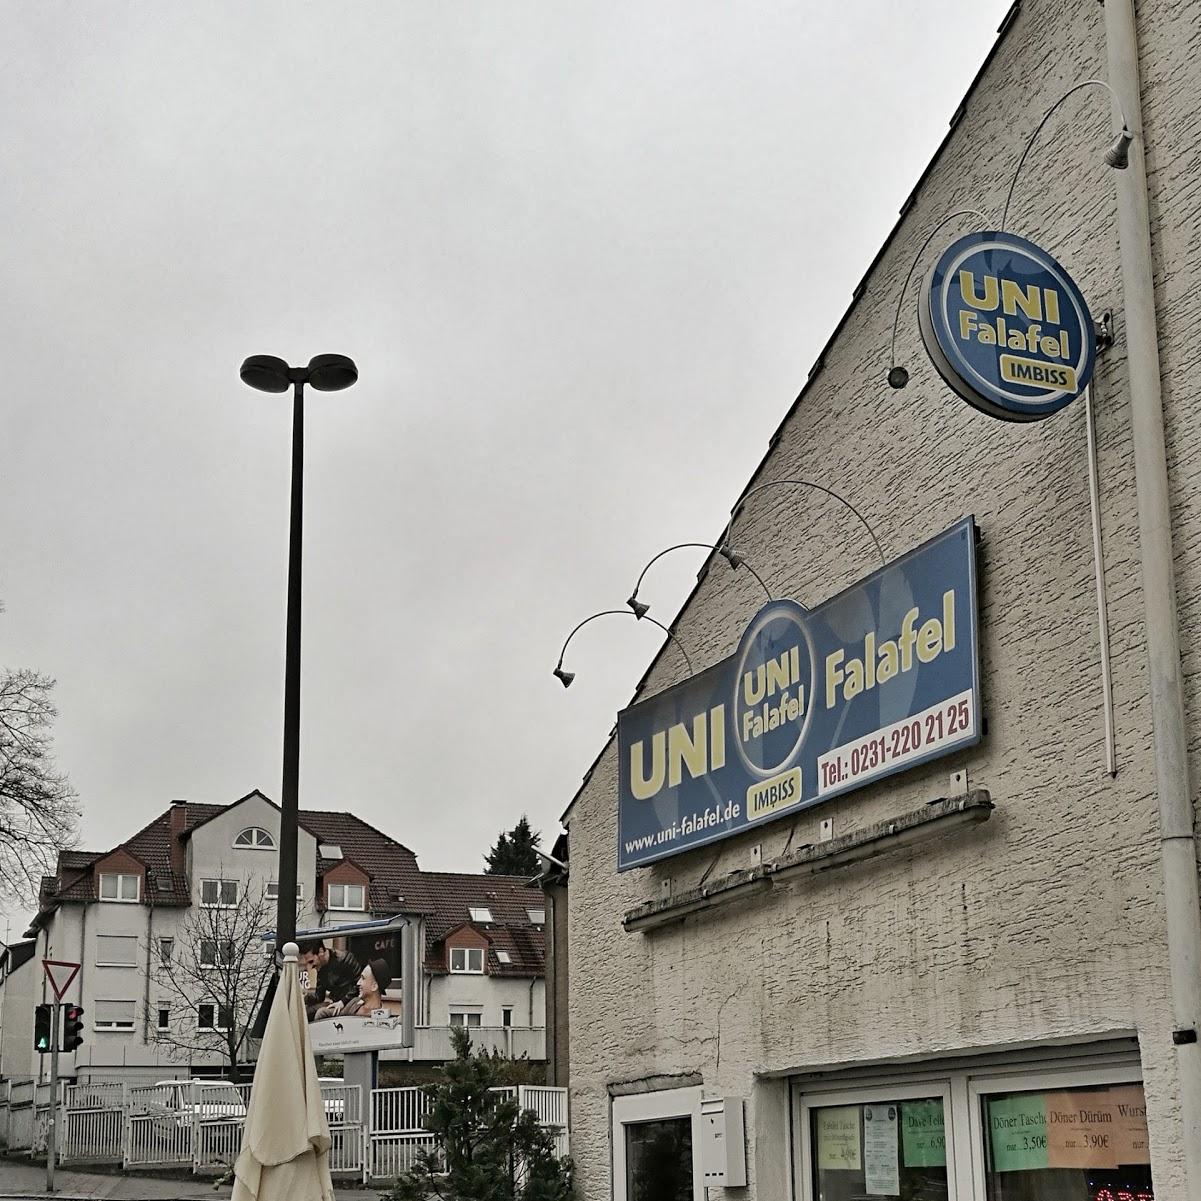 Restaurant "Uni Falafel" in Dortmund